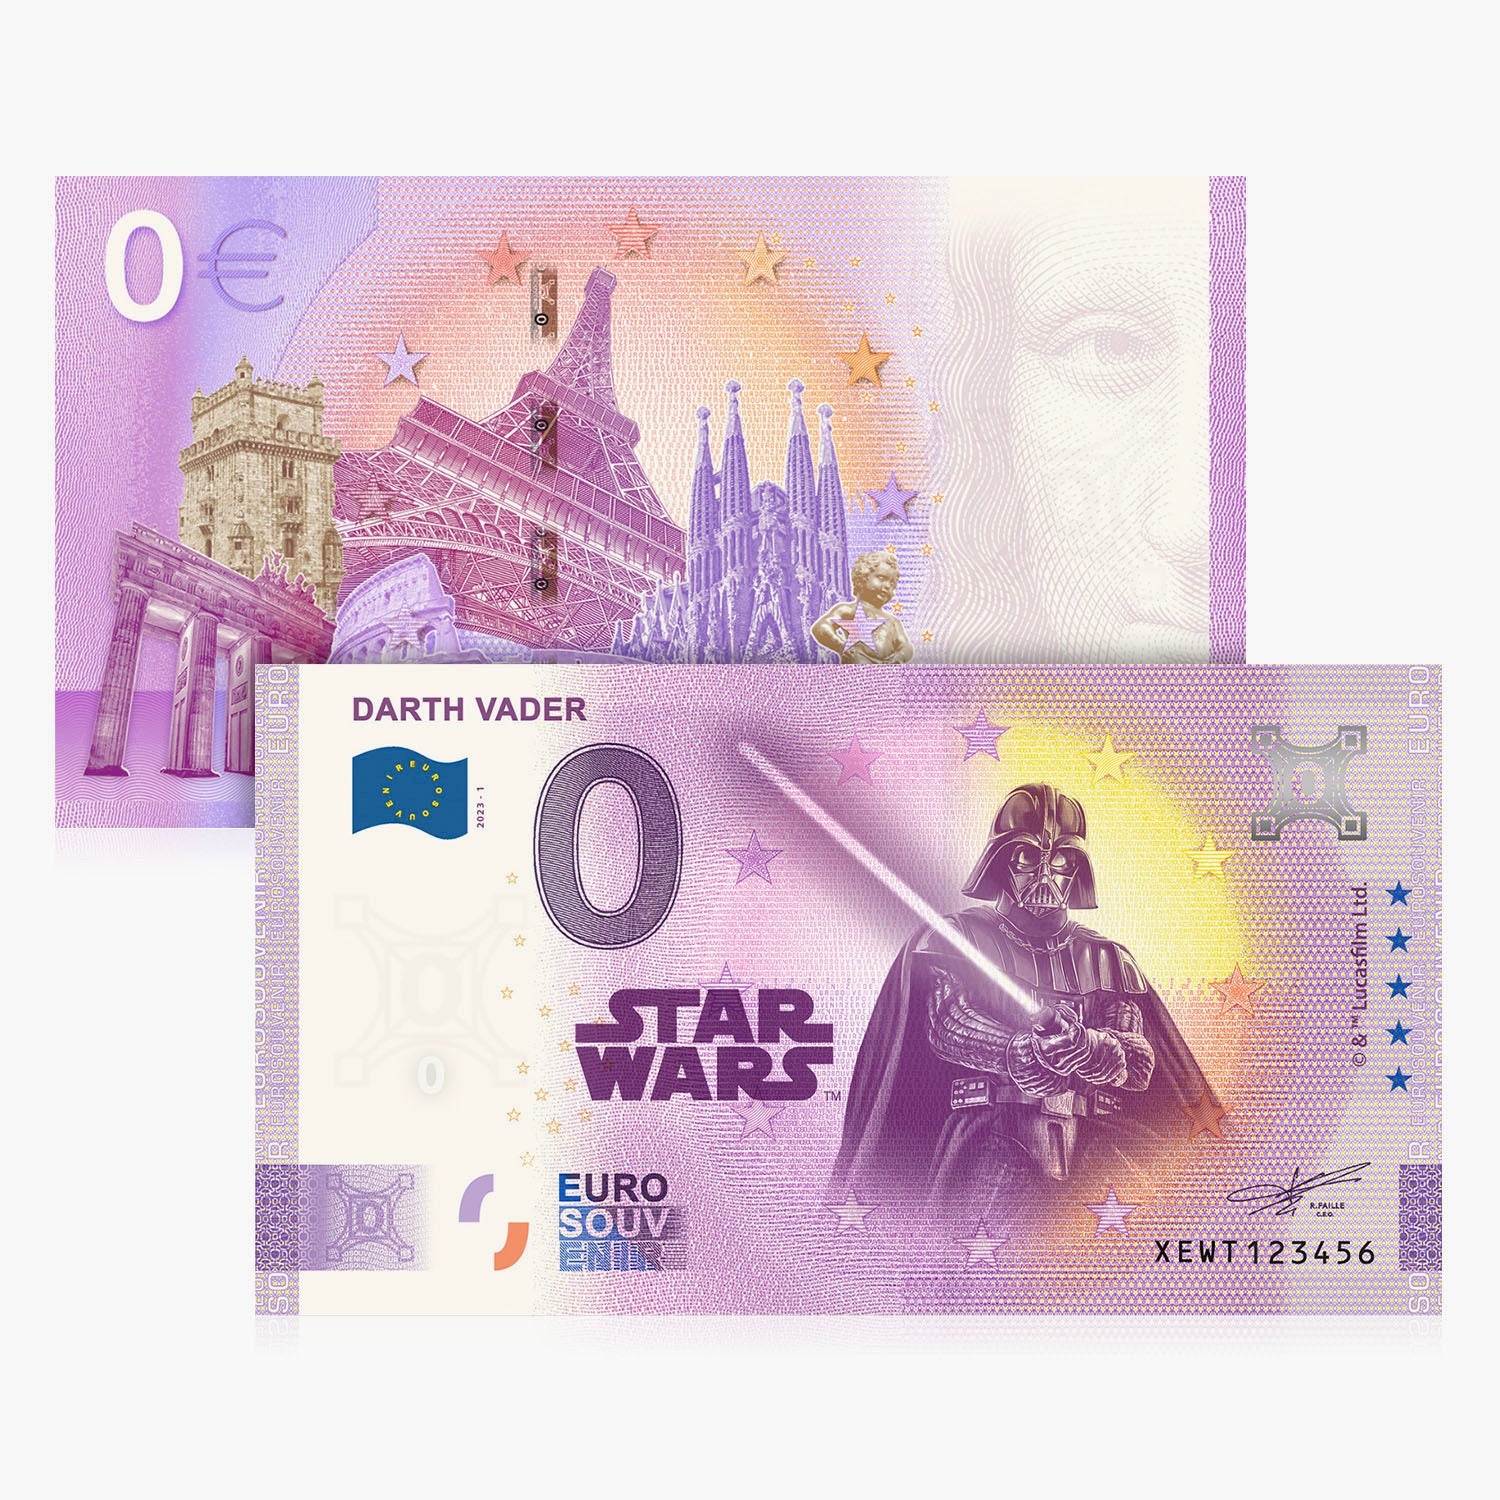 The Official Star Wars Darth Vader 0 Euro Banknote